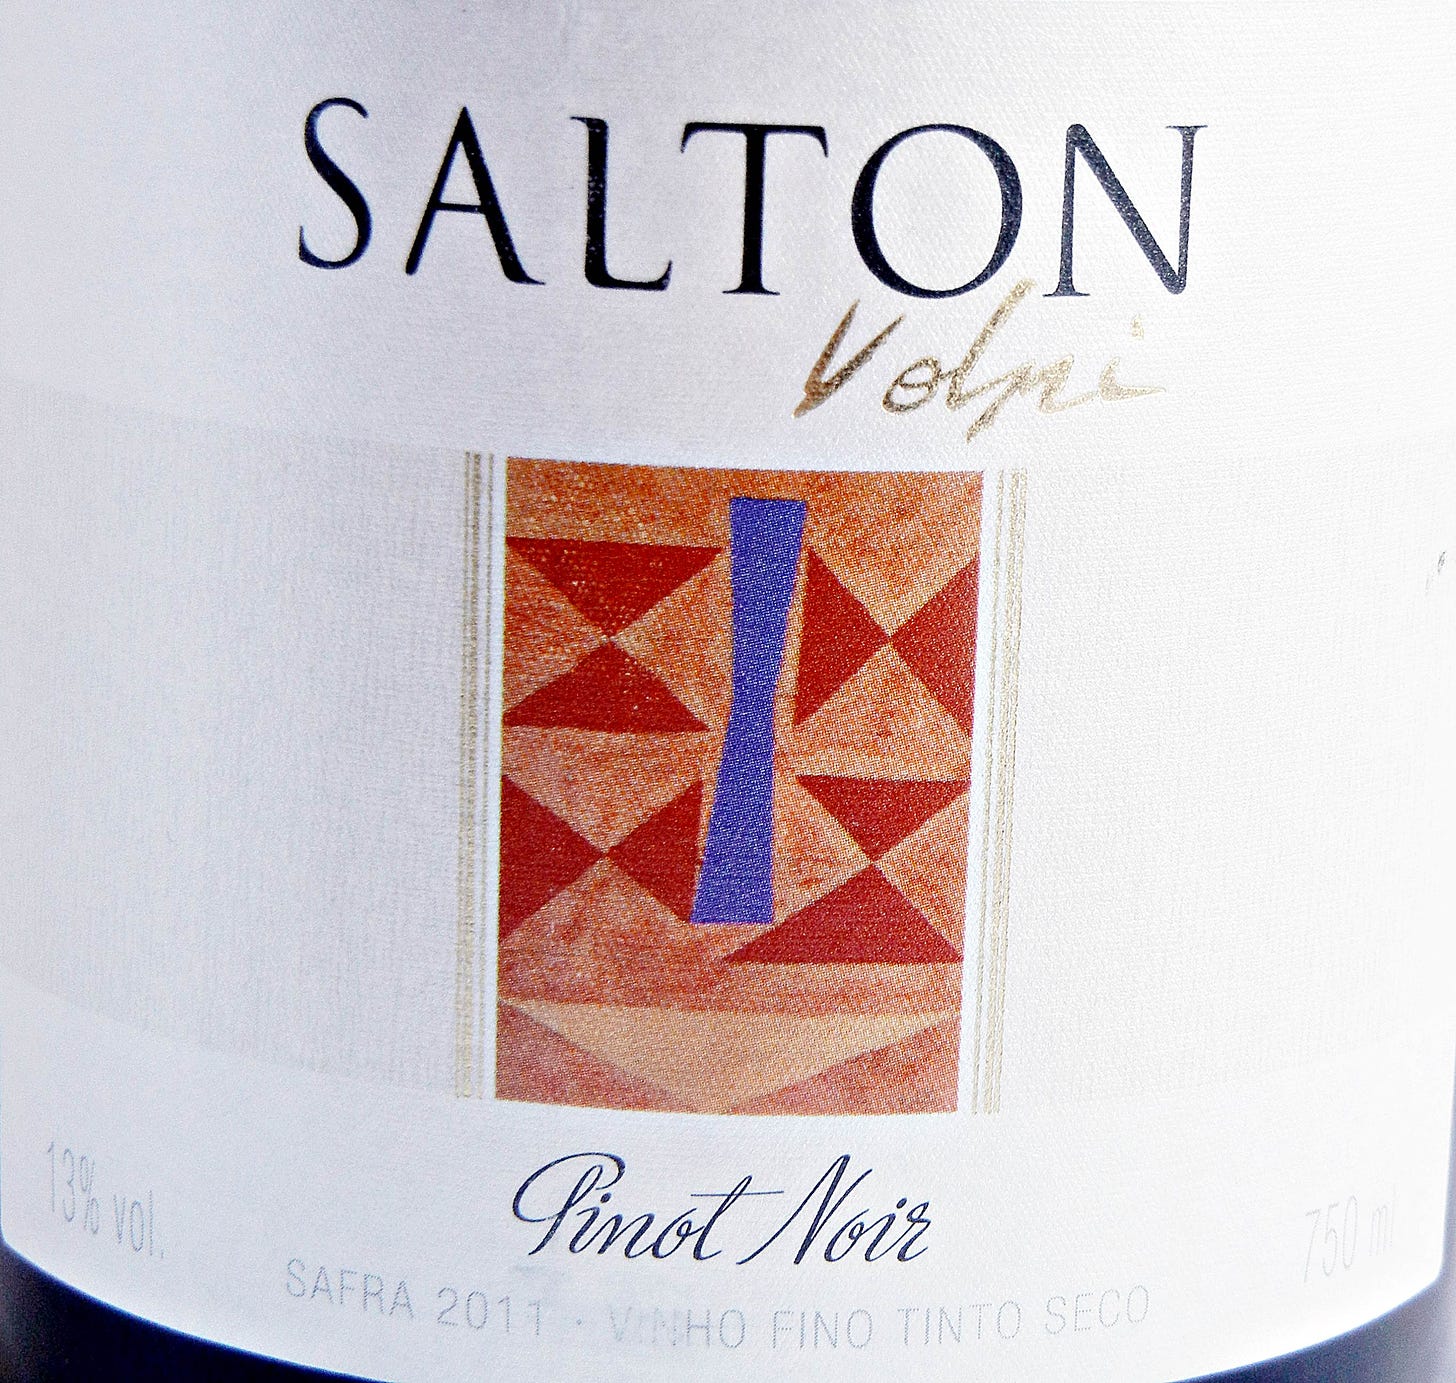 Salton Volpi Pinot Noir 2011 Label - BC Pinot Noir Tasting Review 21